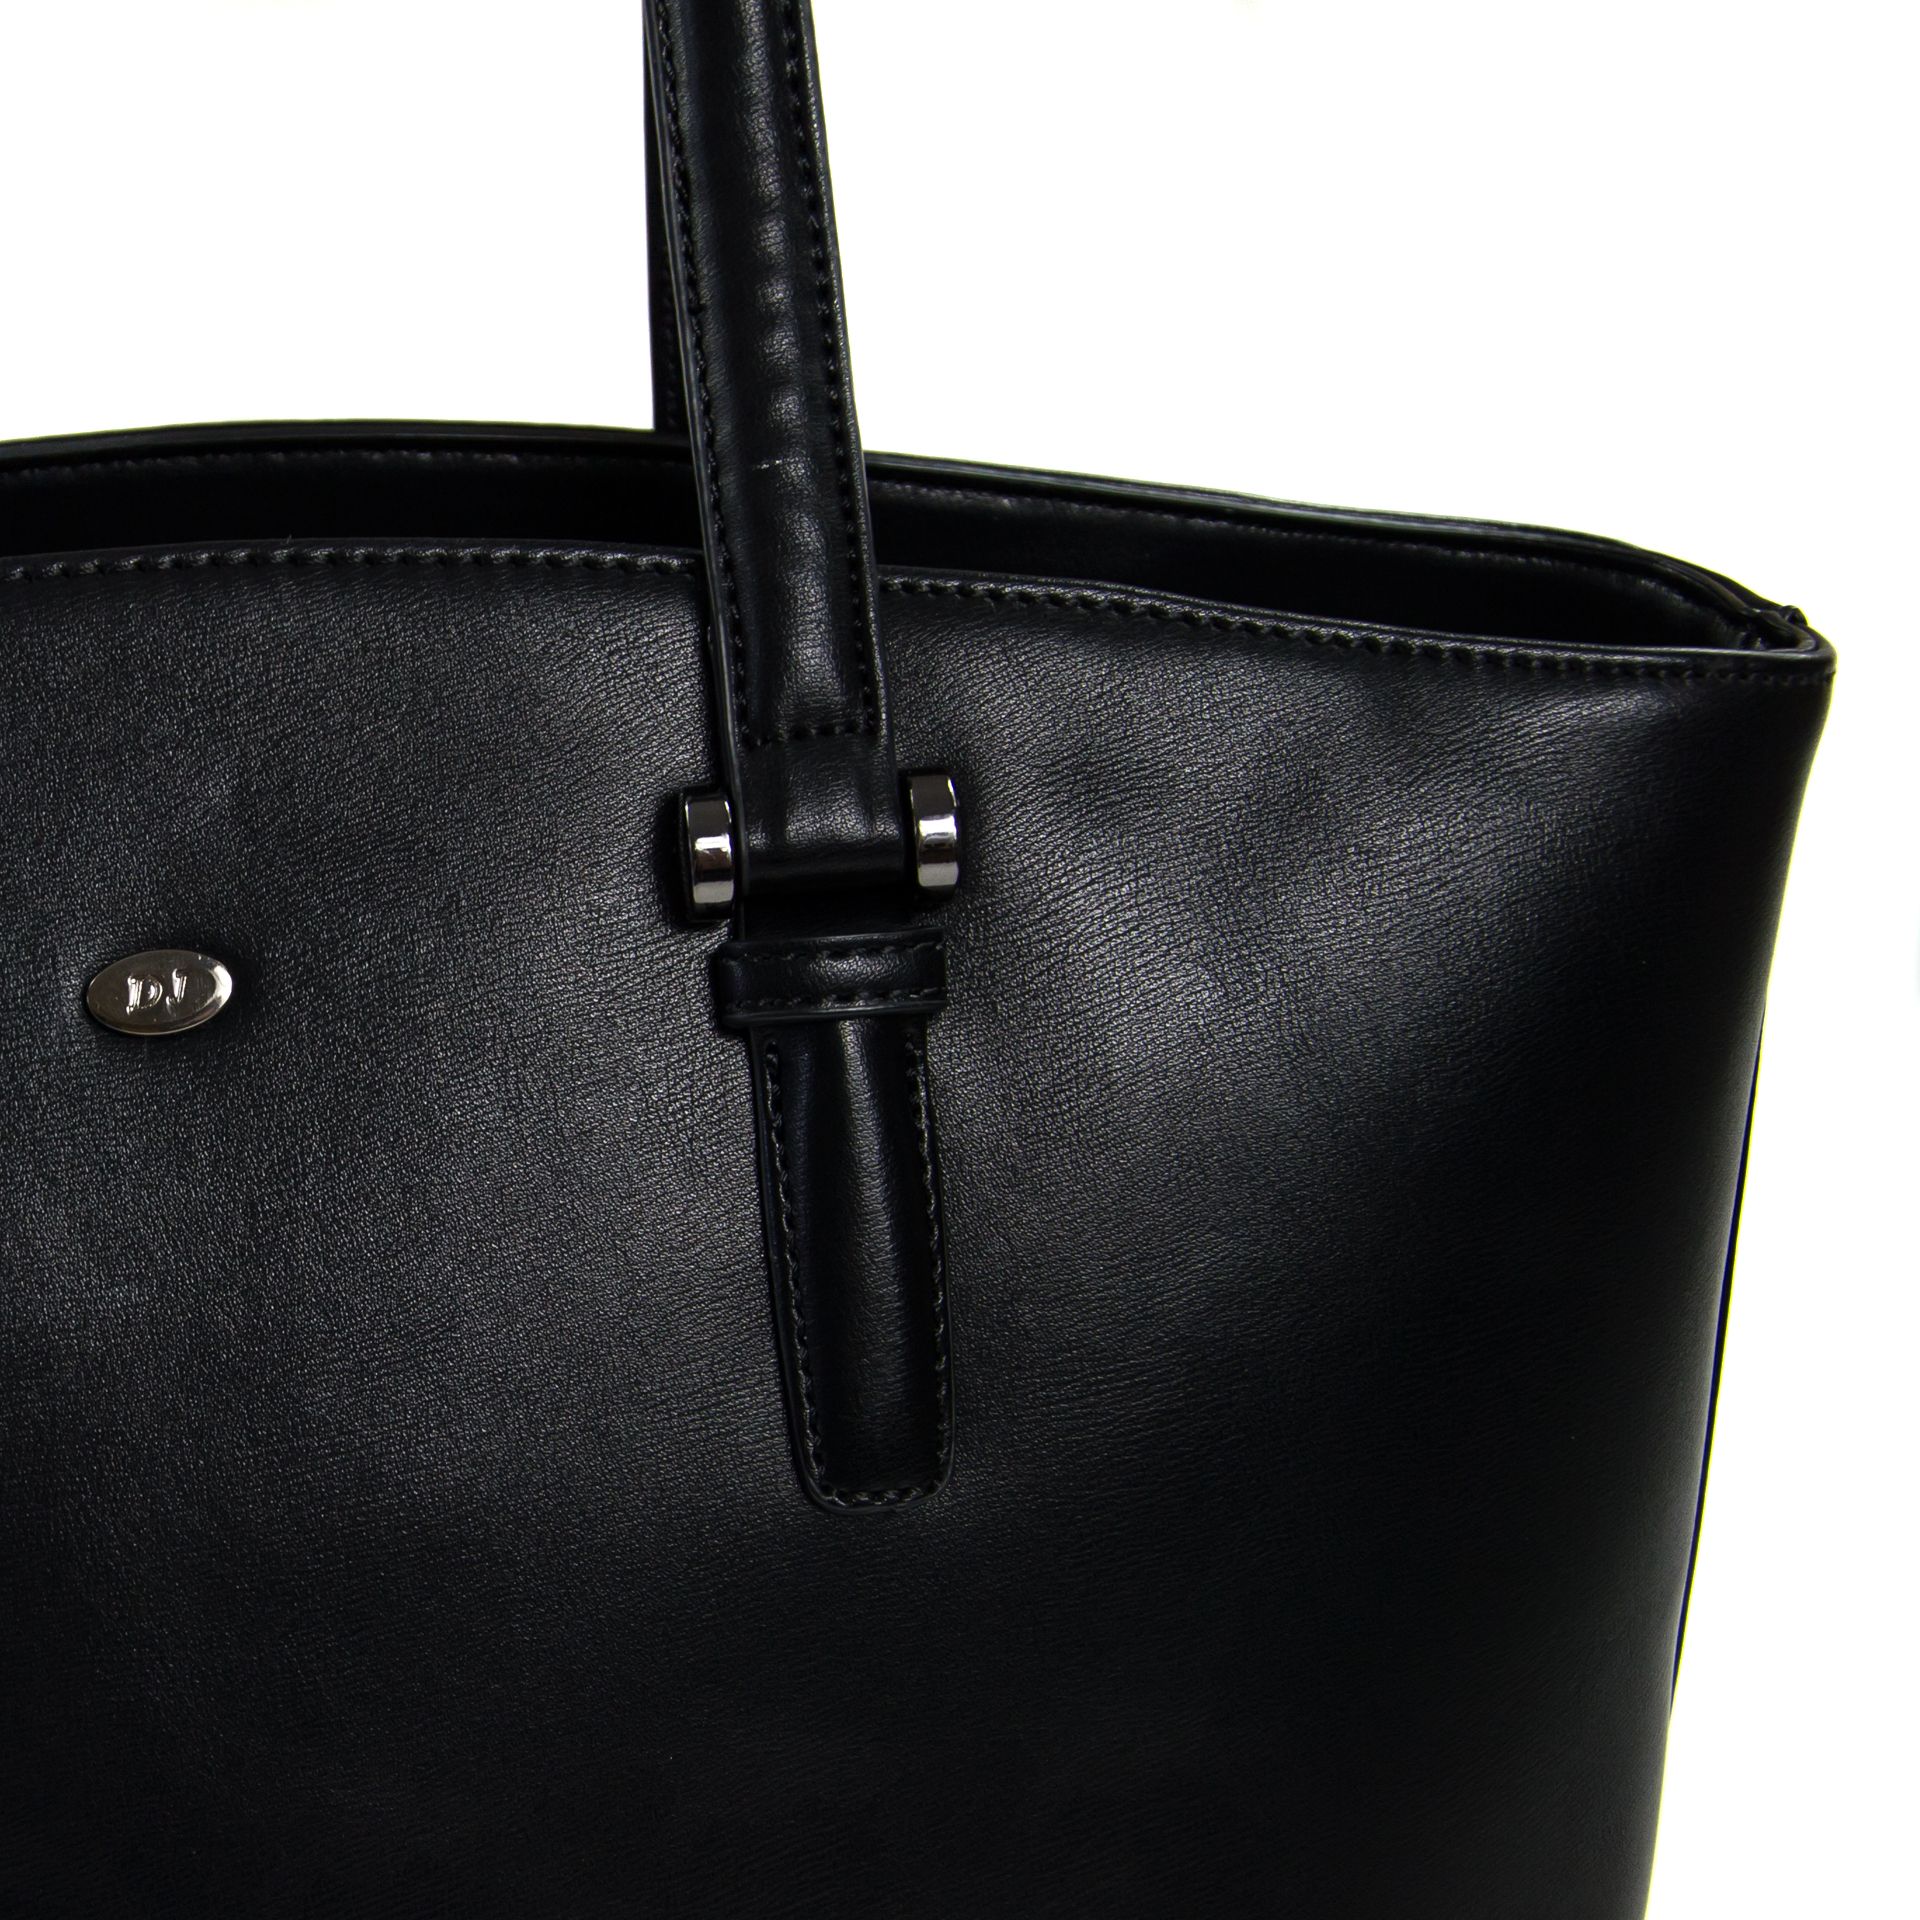 Leather bag - Allora image 2